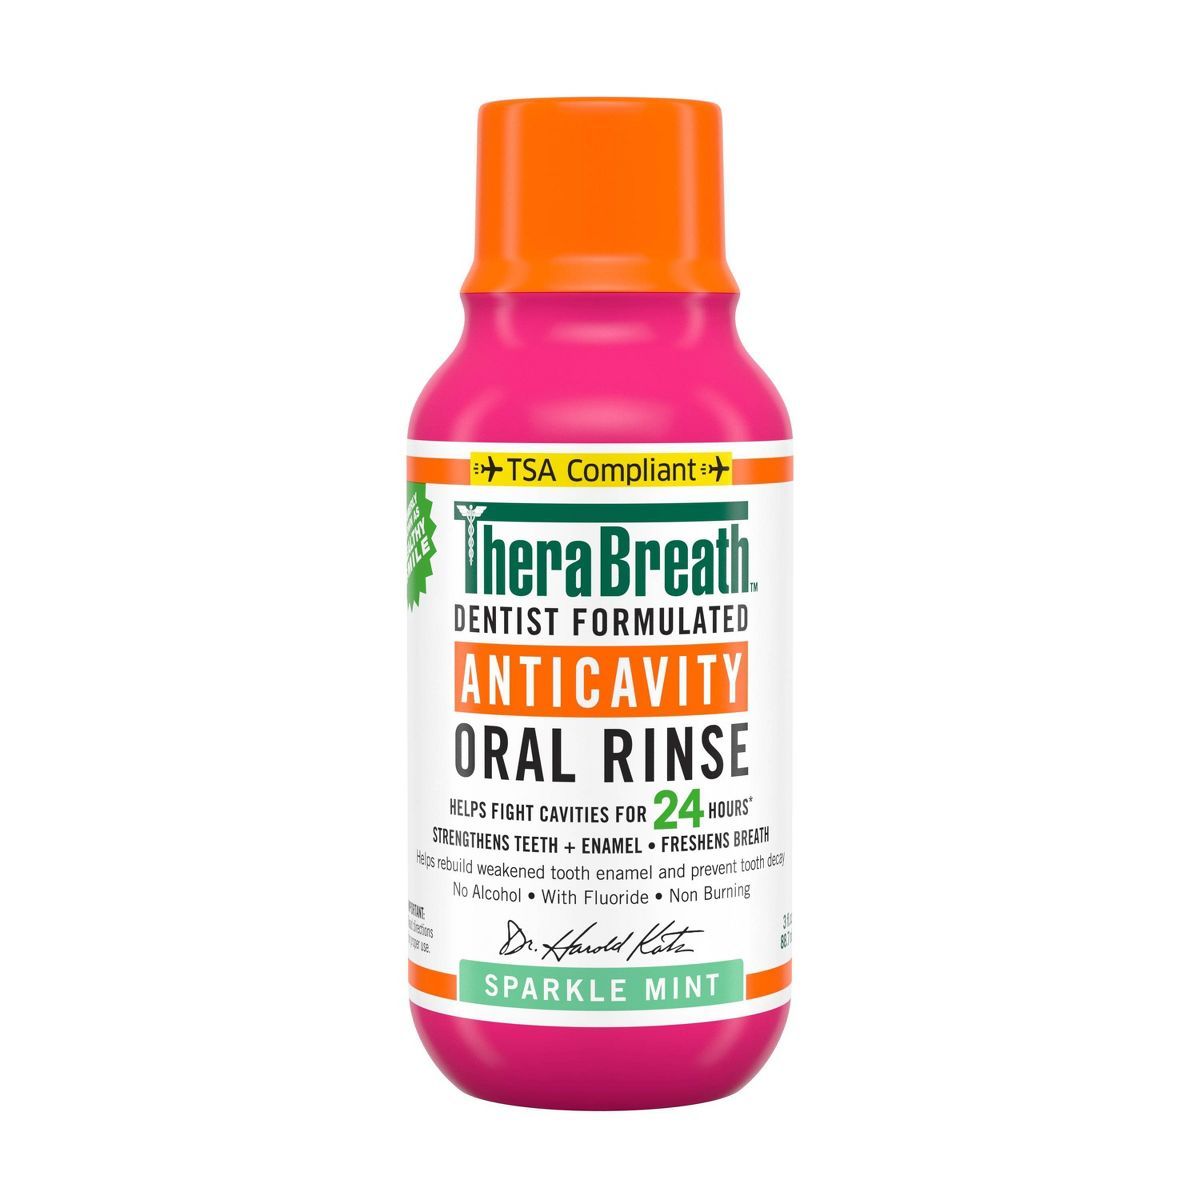 TheraBreath Anticavity Mouthwash Sparkle Mint - 3oz | Target